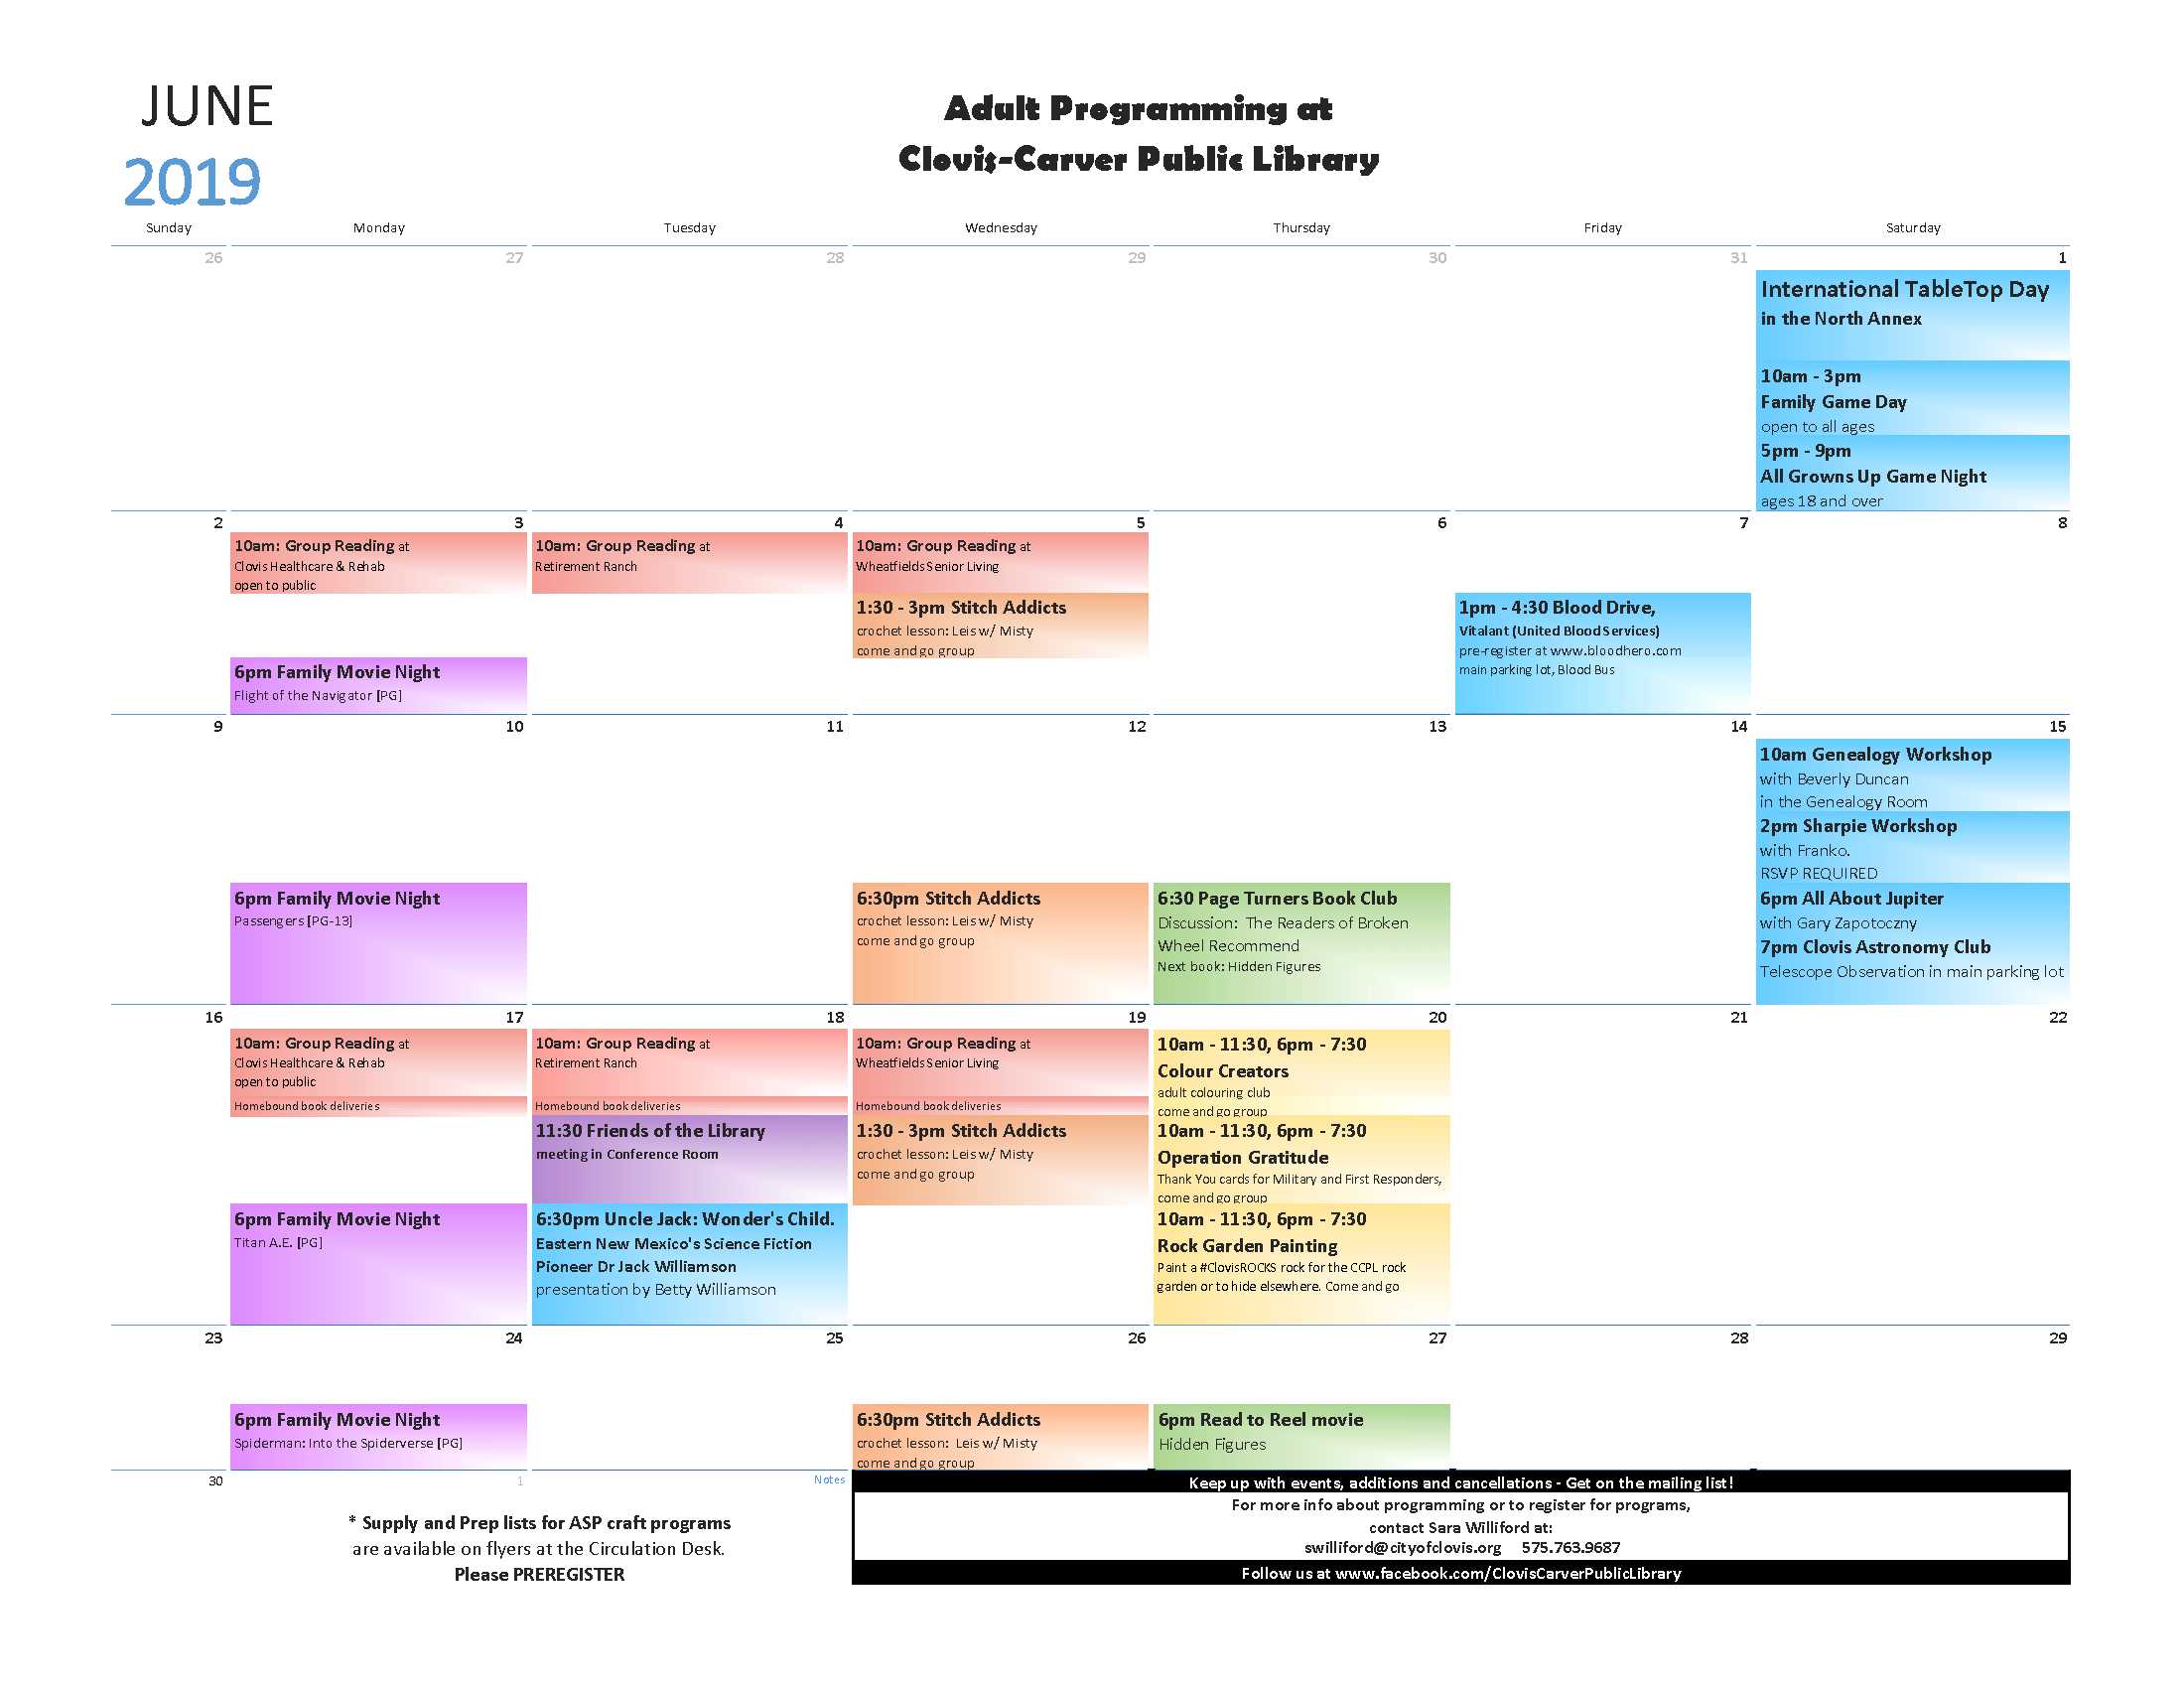 Adult Programming Calendar - June 2019